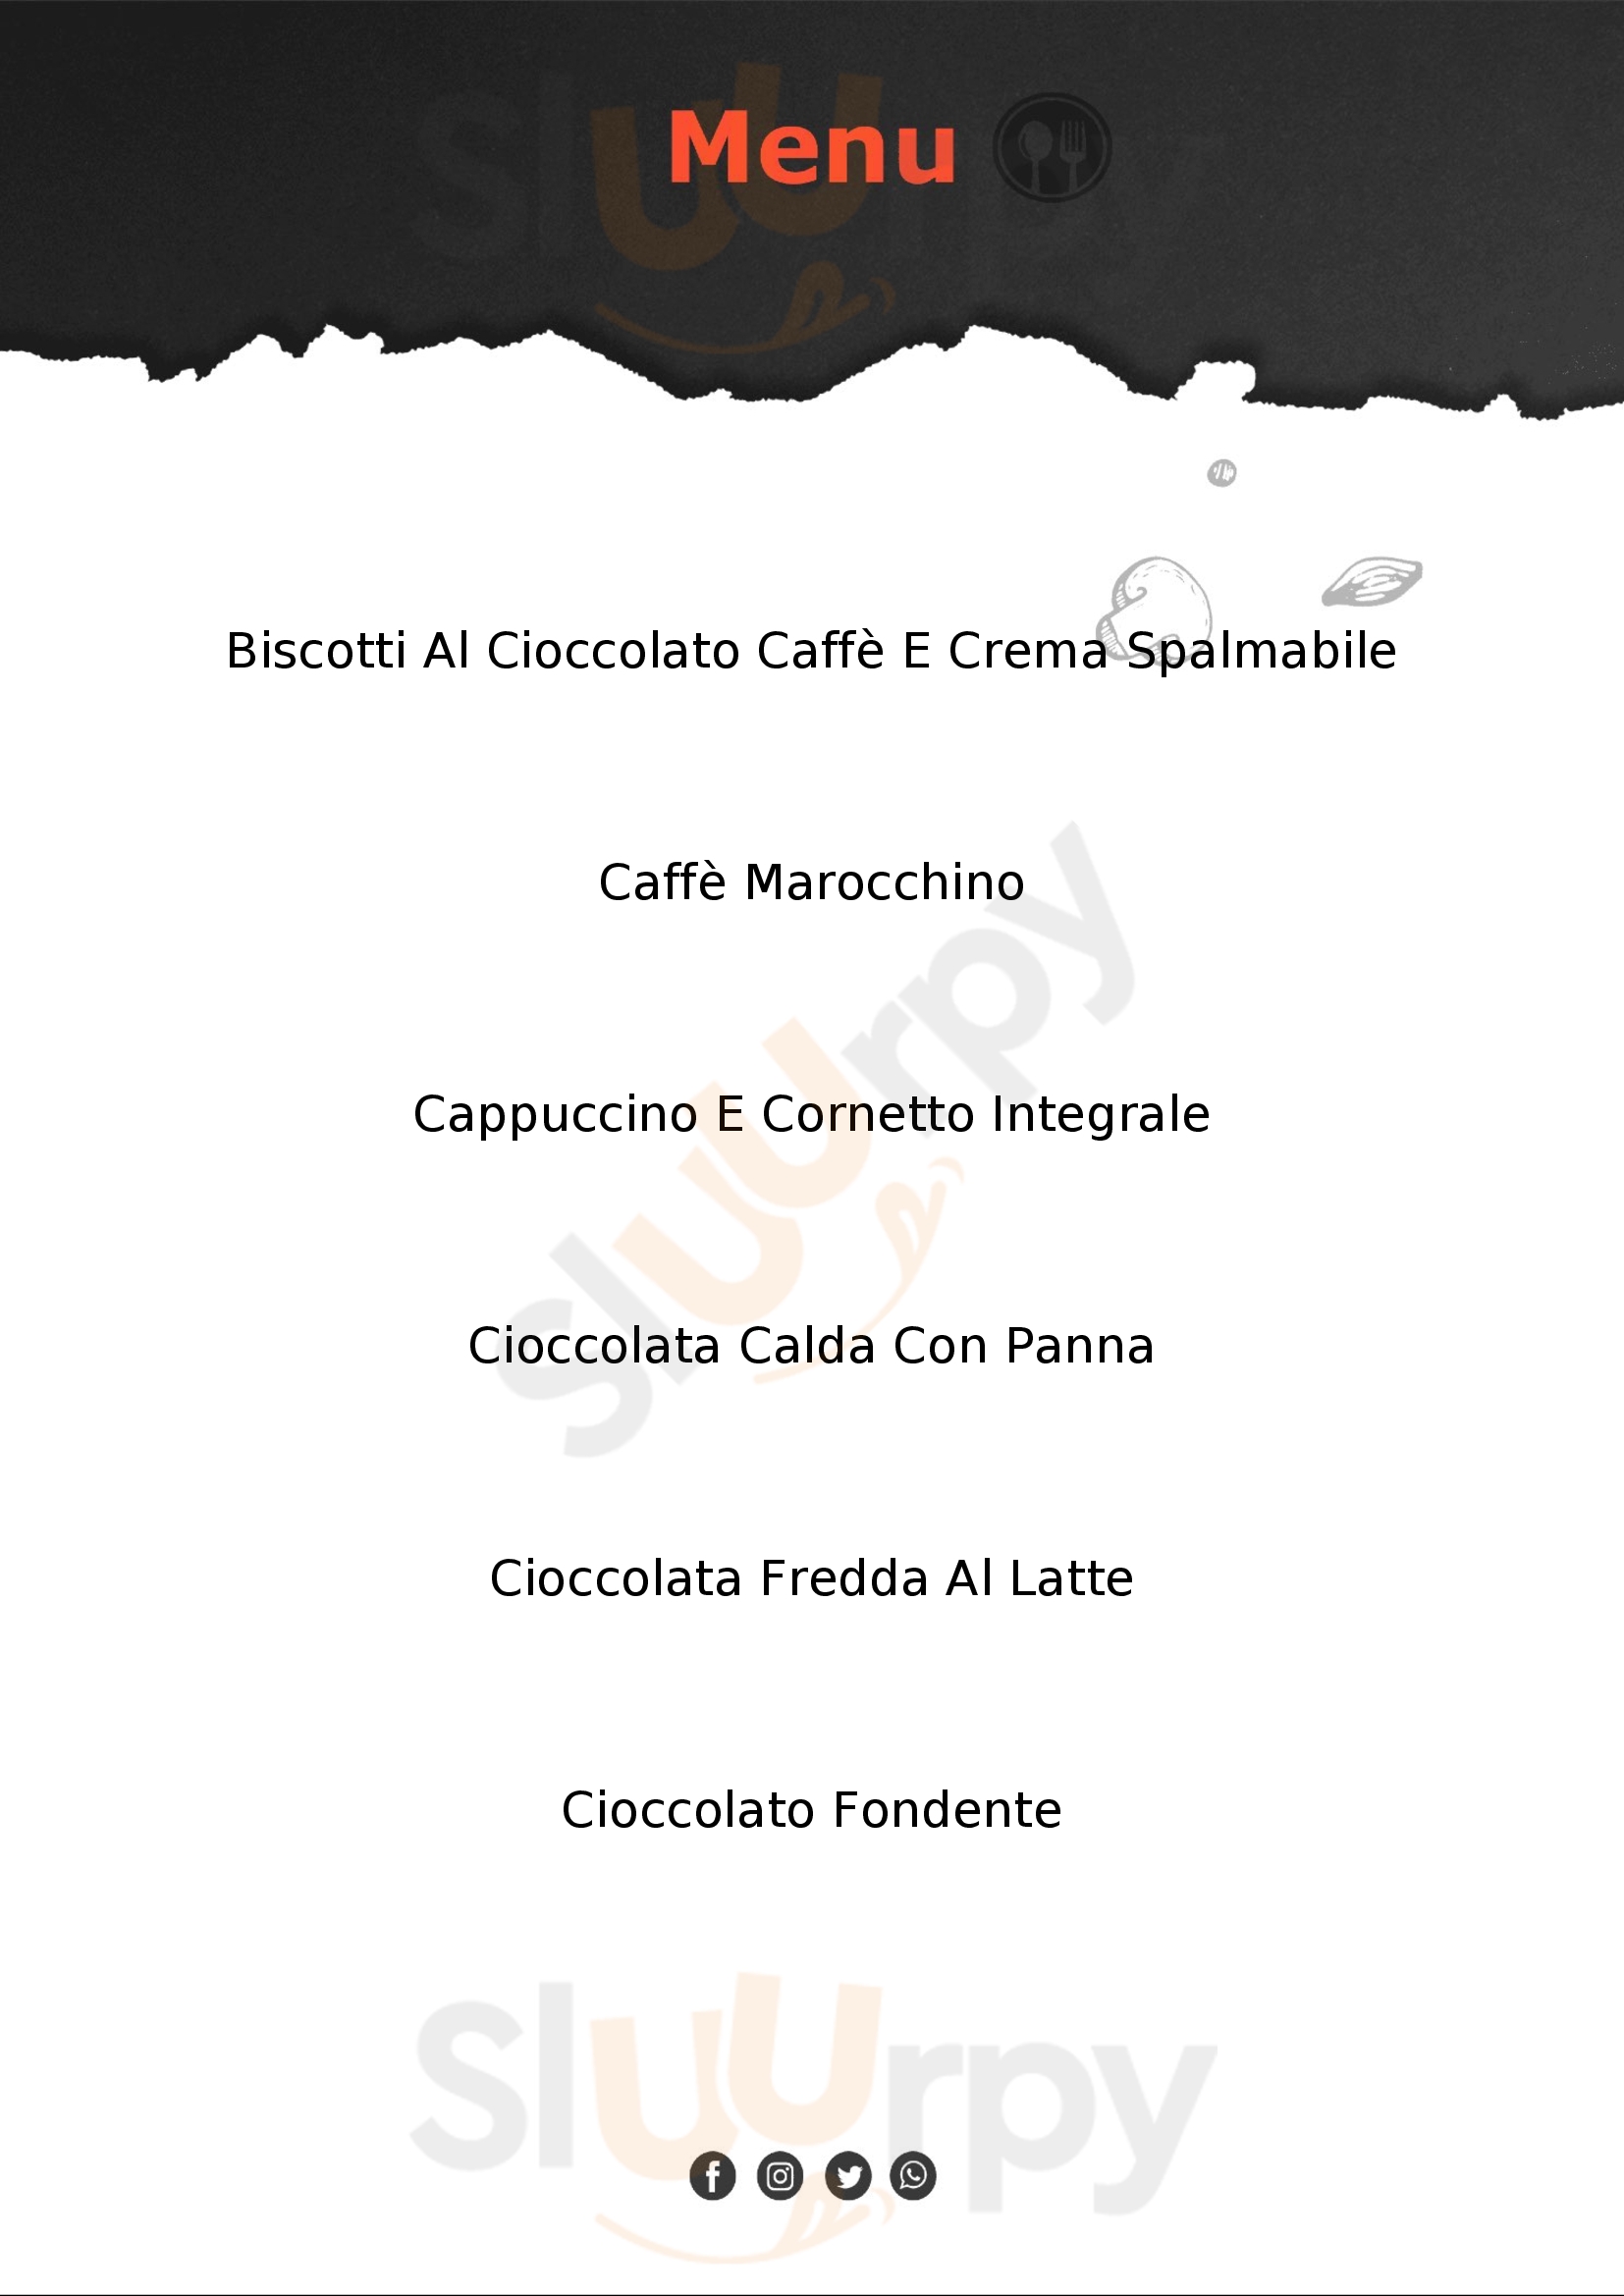 Slitti - Cioccolato e Caffe' Monsummano Terme menù 1 pagina